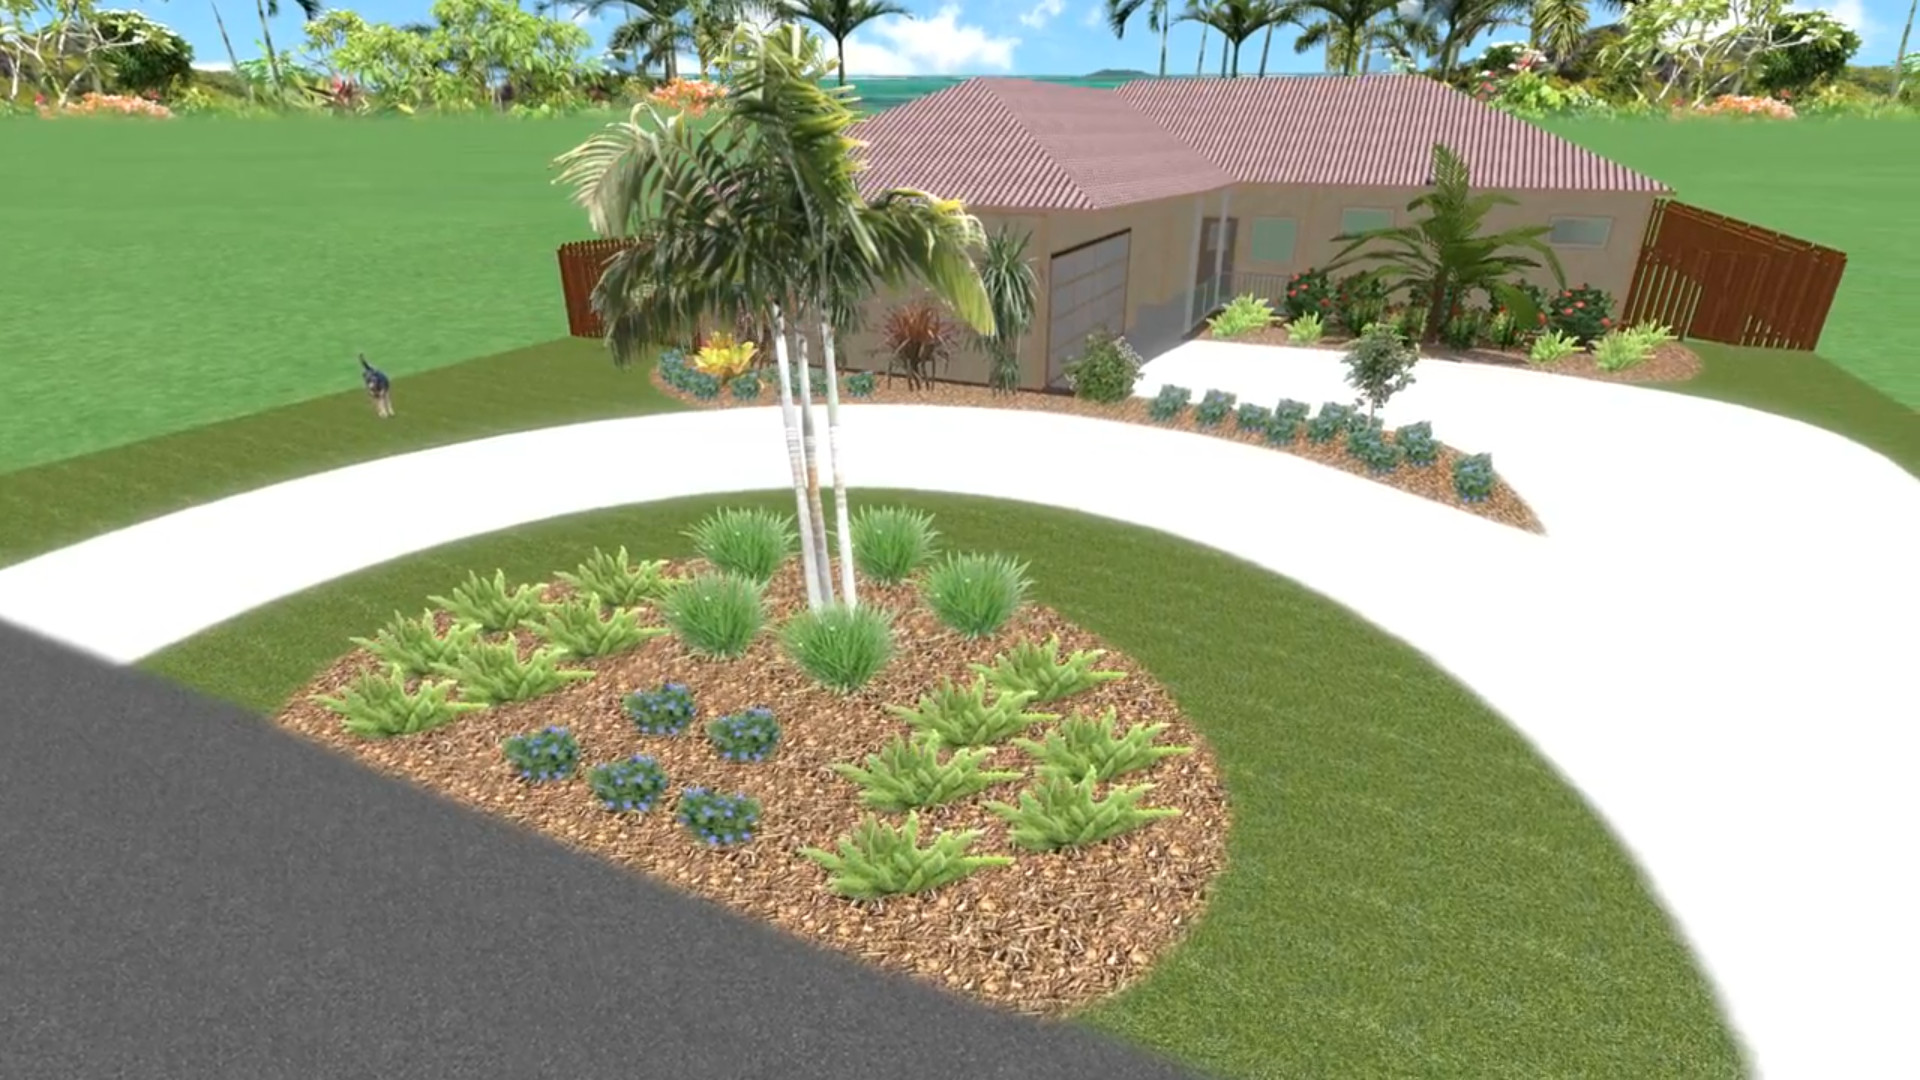 An image of a digital 3D rendering of a front yard landscape design.